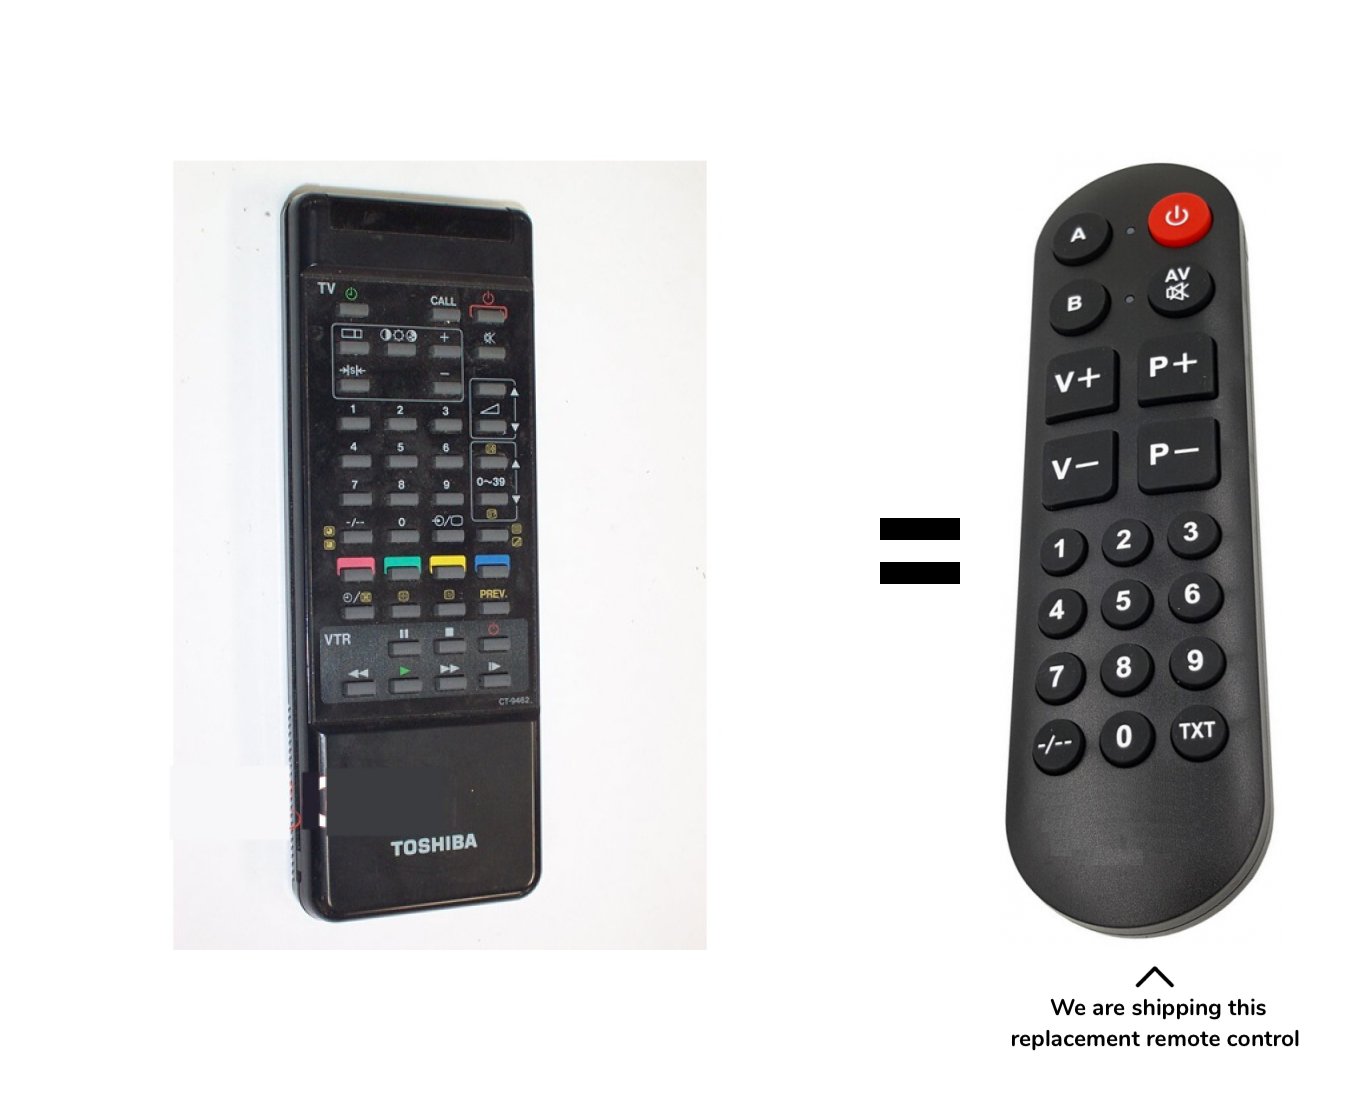 Toshiba 2104XH remote control for seniors